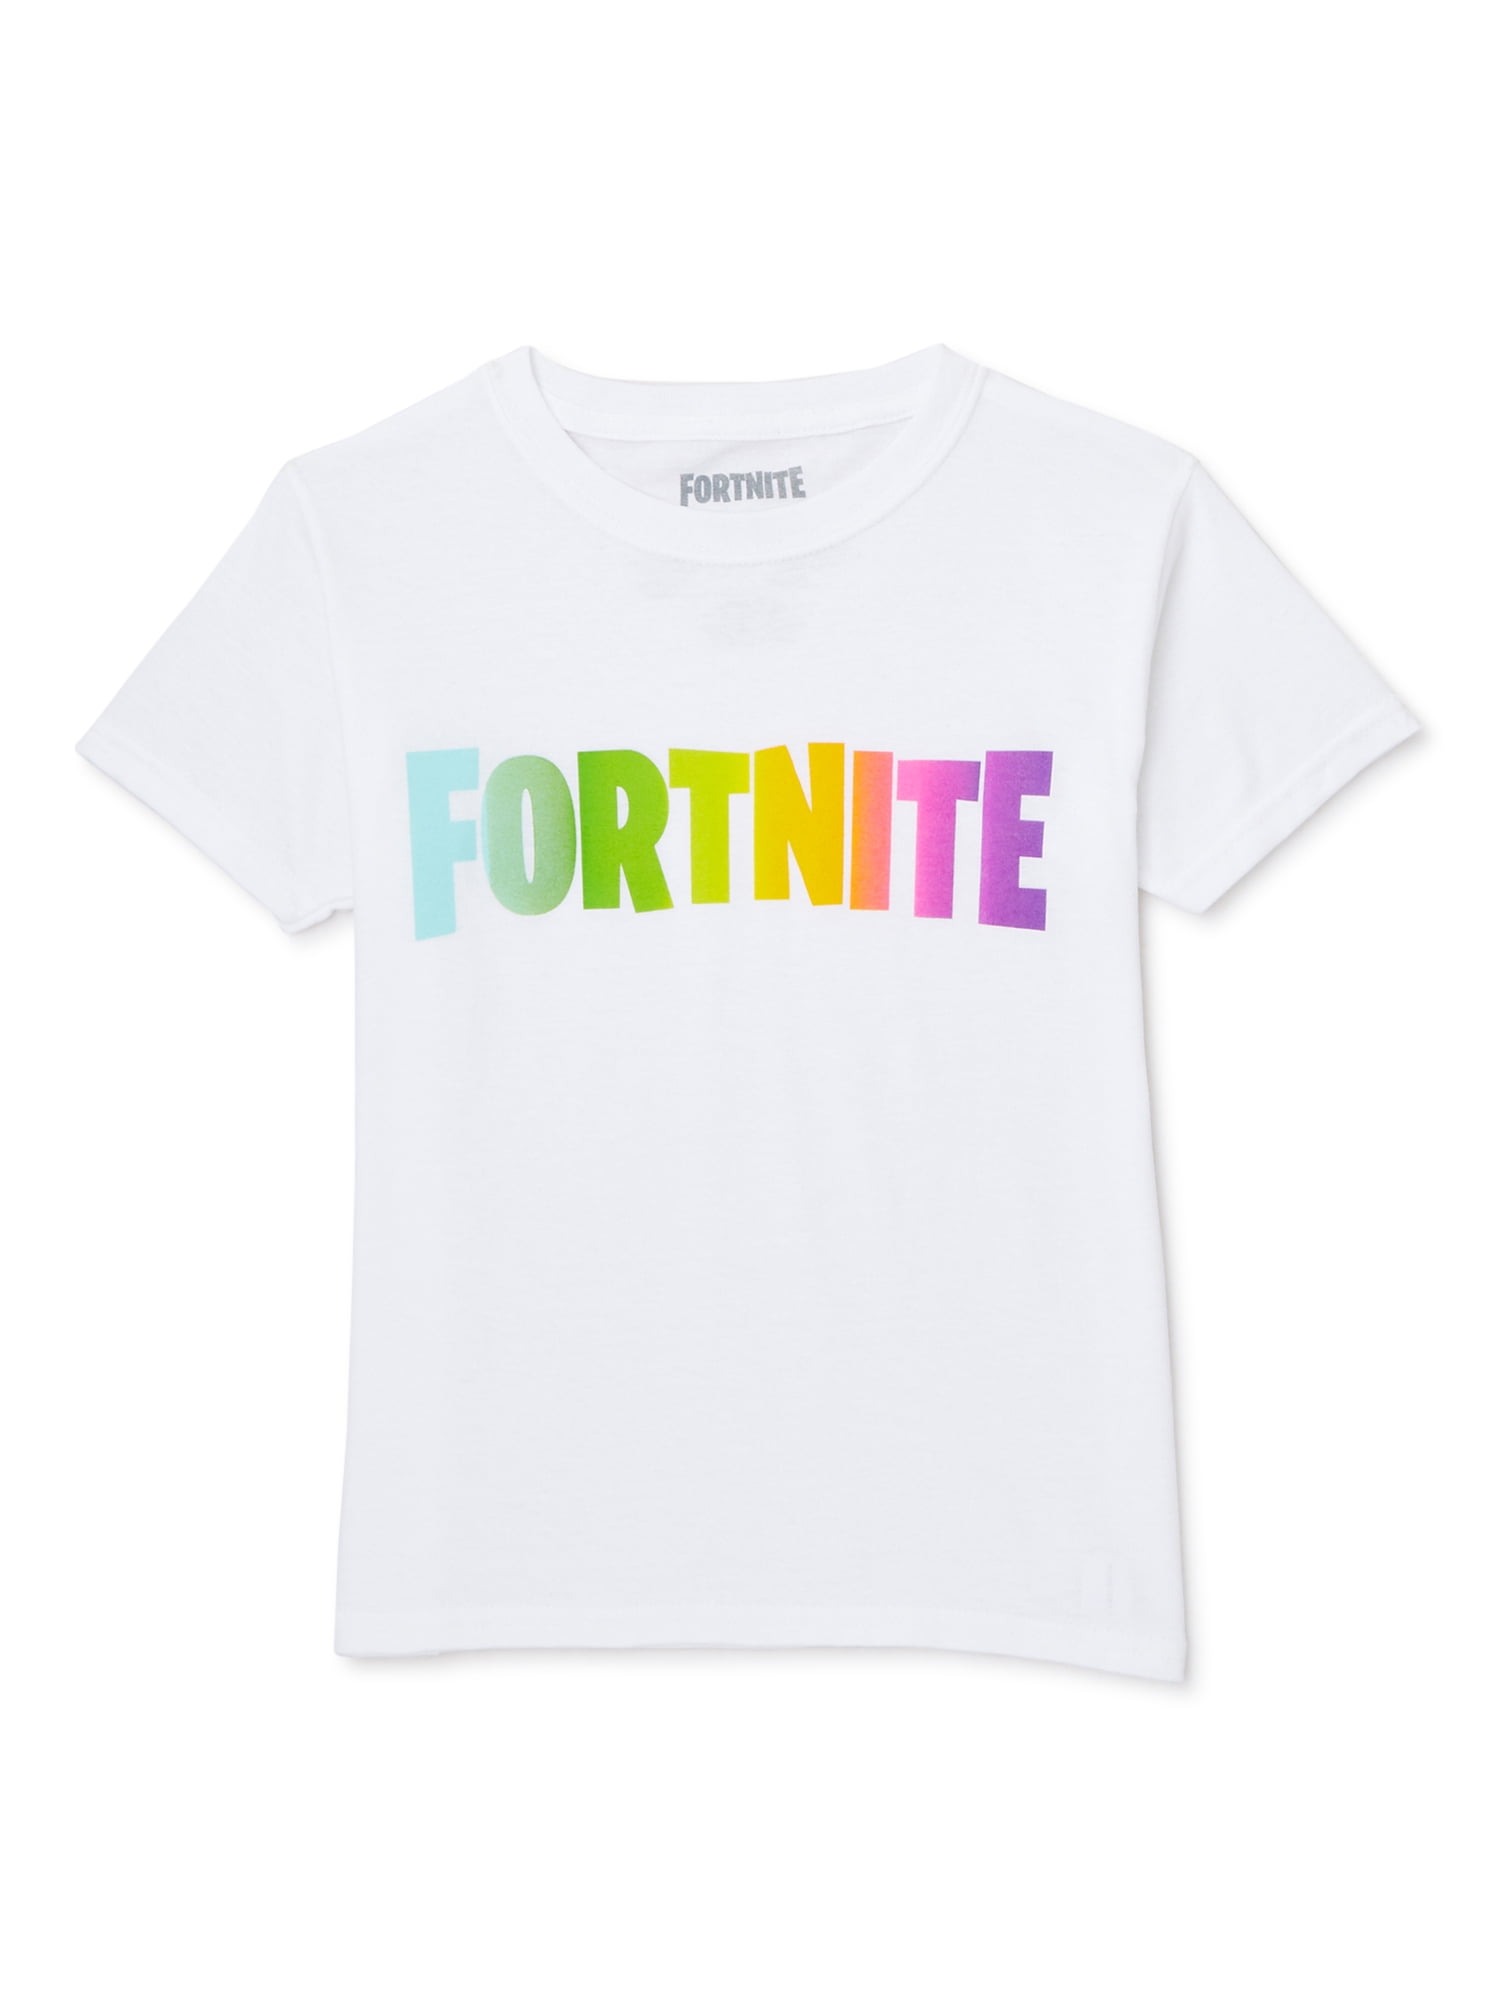 Fortnite kids T shirts size 8-16 brand new 